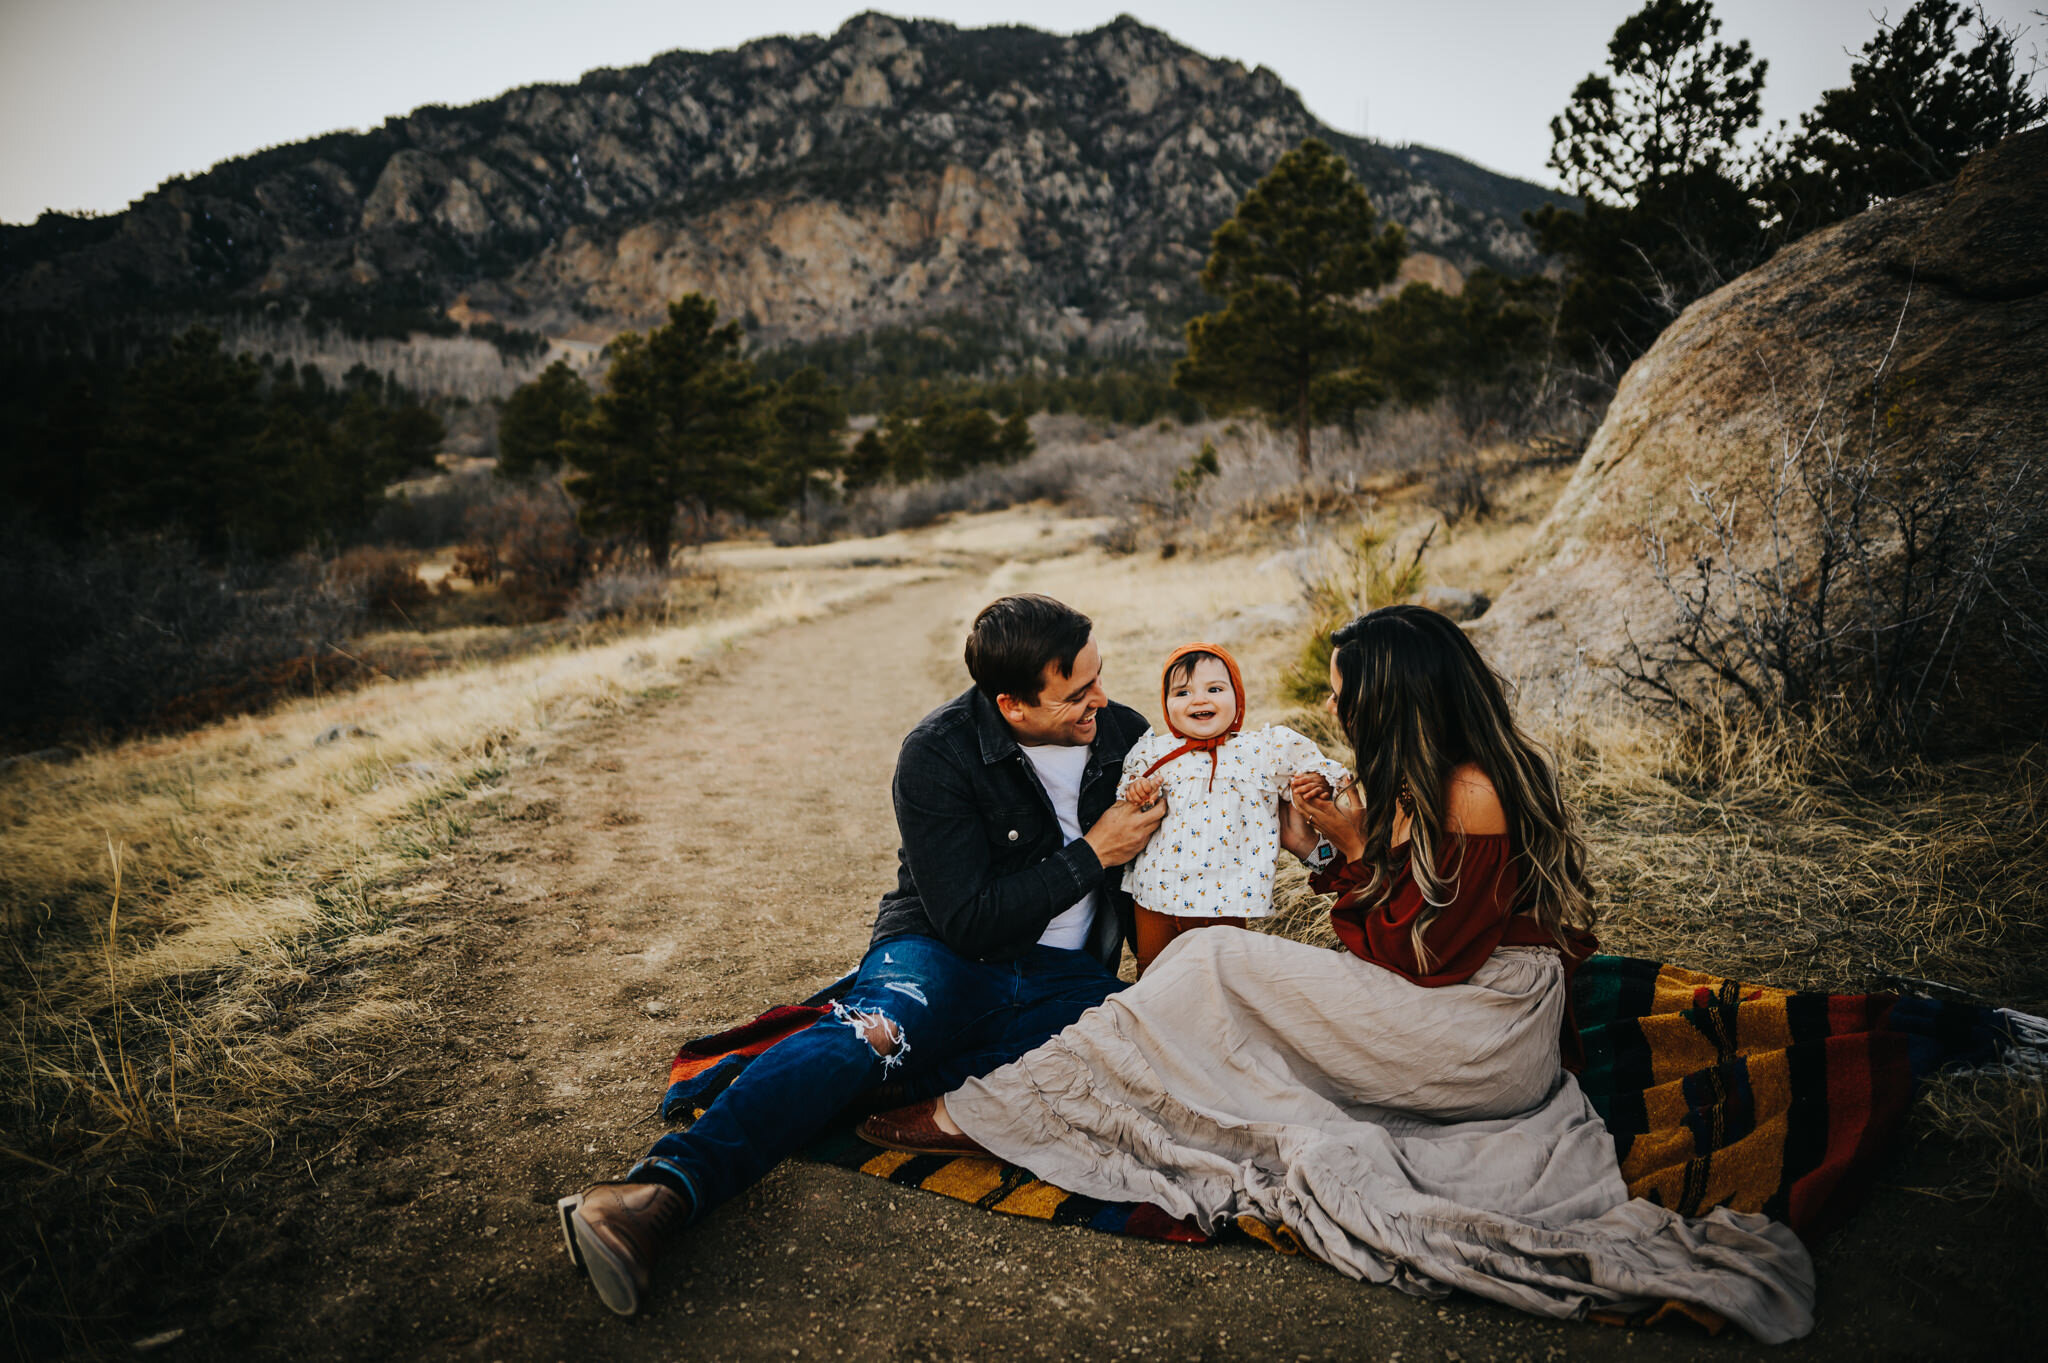 Janine Mullins Family Session Colorado Springs Photographer Cheyenne Mountain State Park Wild Prairie Photography-6- 2021.jpg